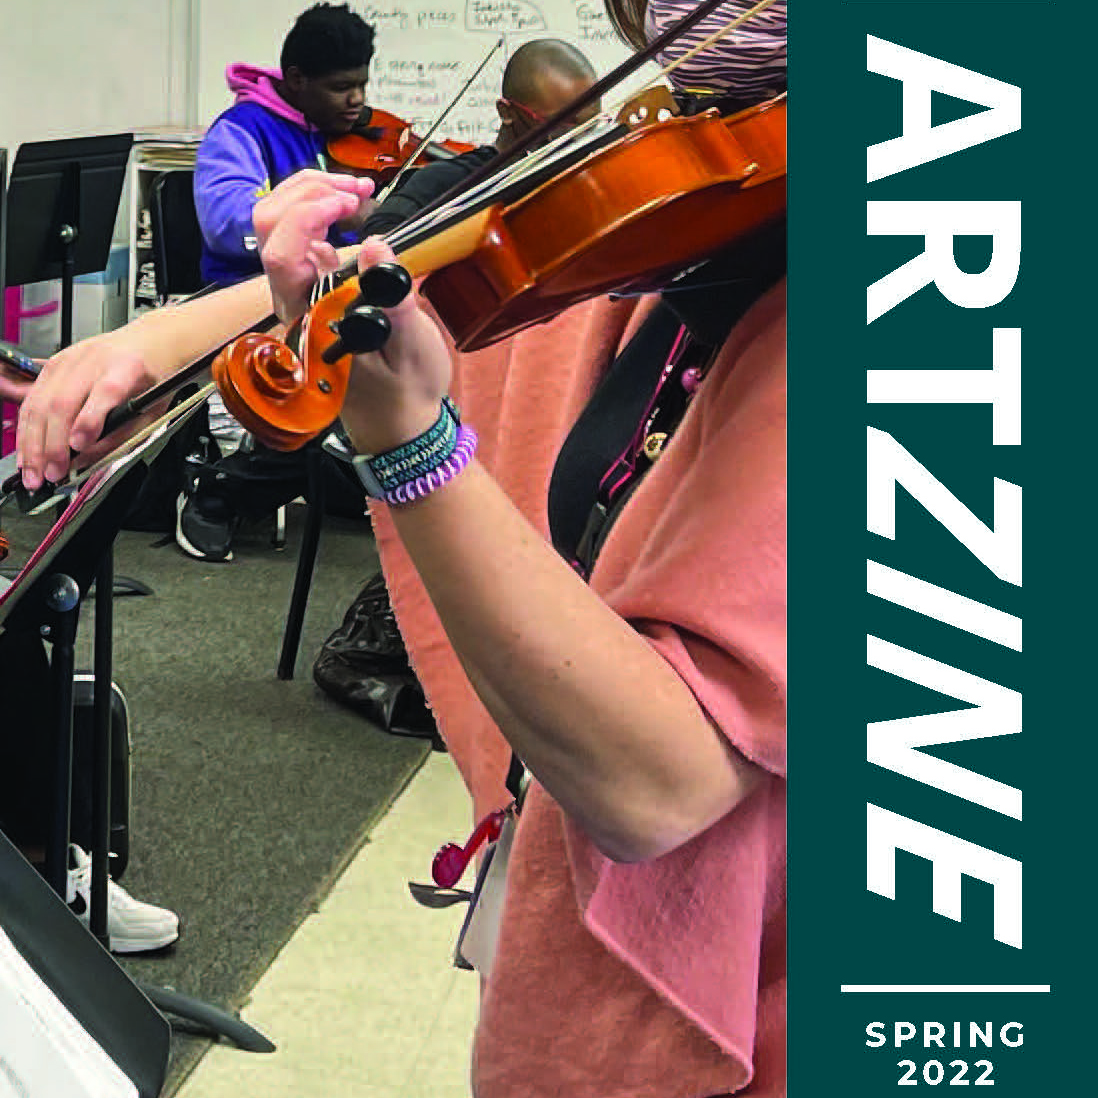 Artzine spring2022 cover%20square%20copy